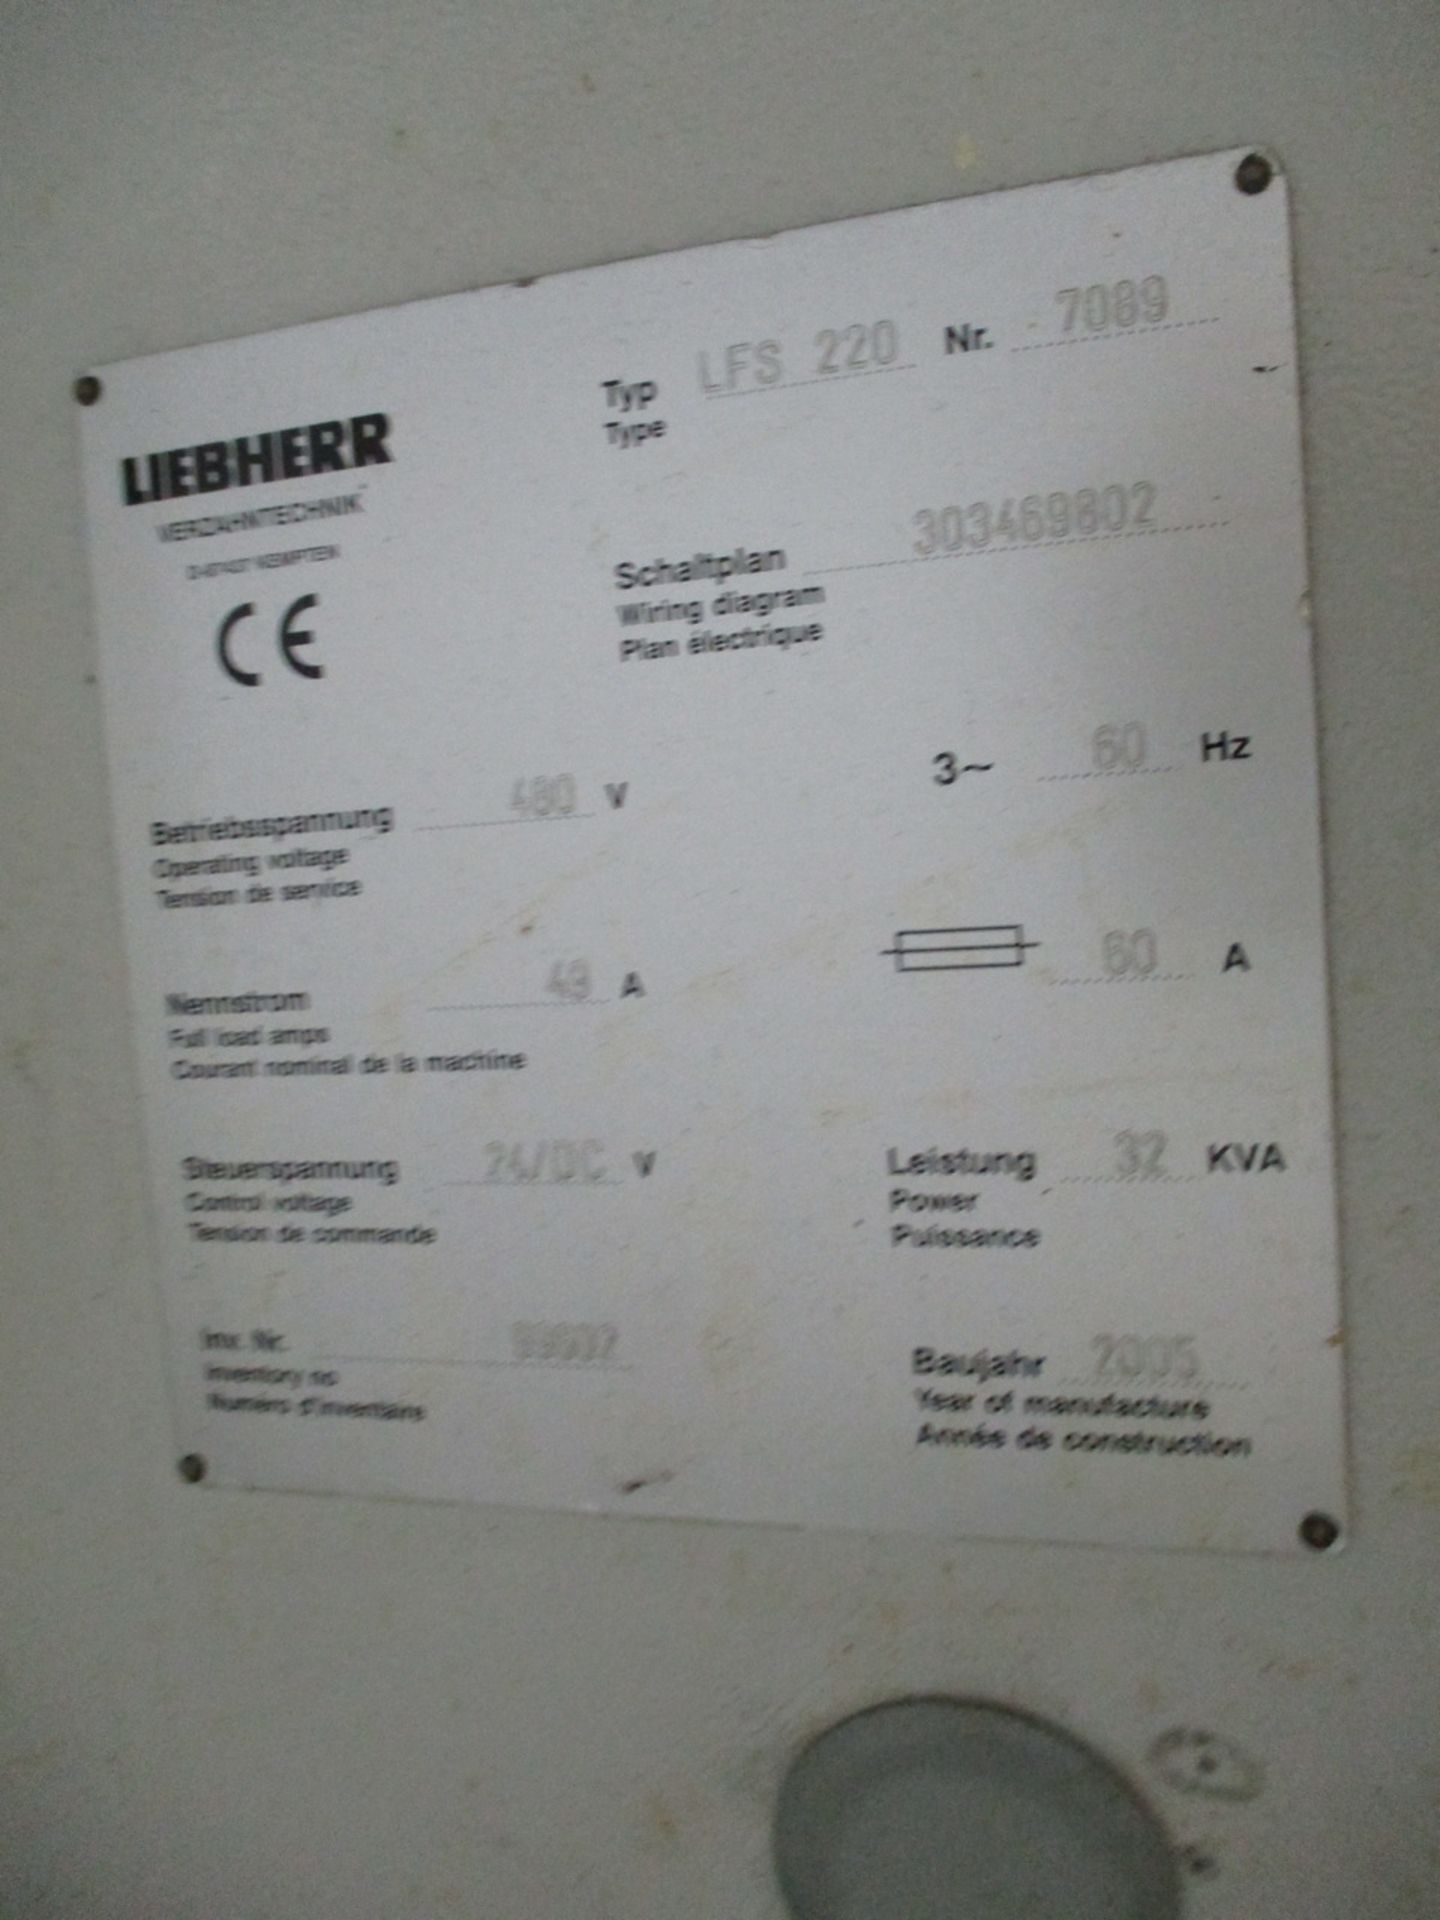 2005 Liebherr LFS 220 CNC Gear Shaper - Image 8 of 23